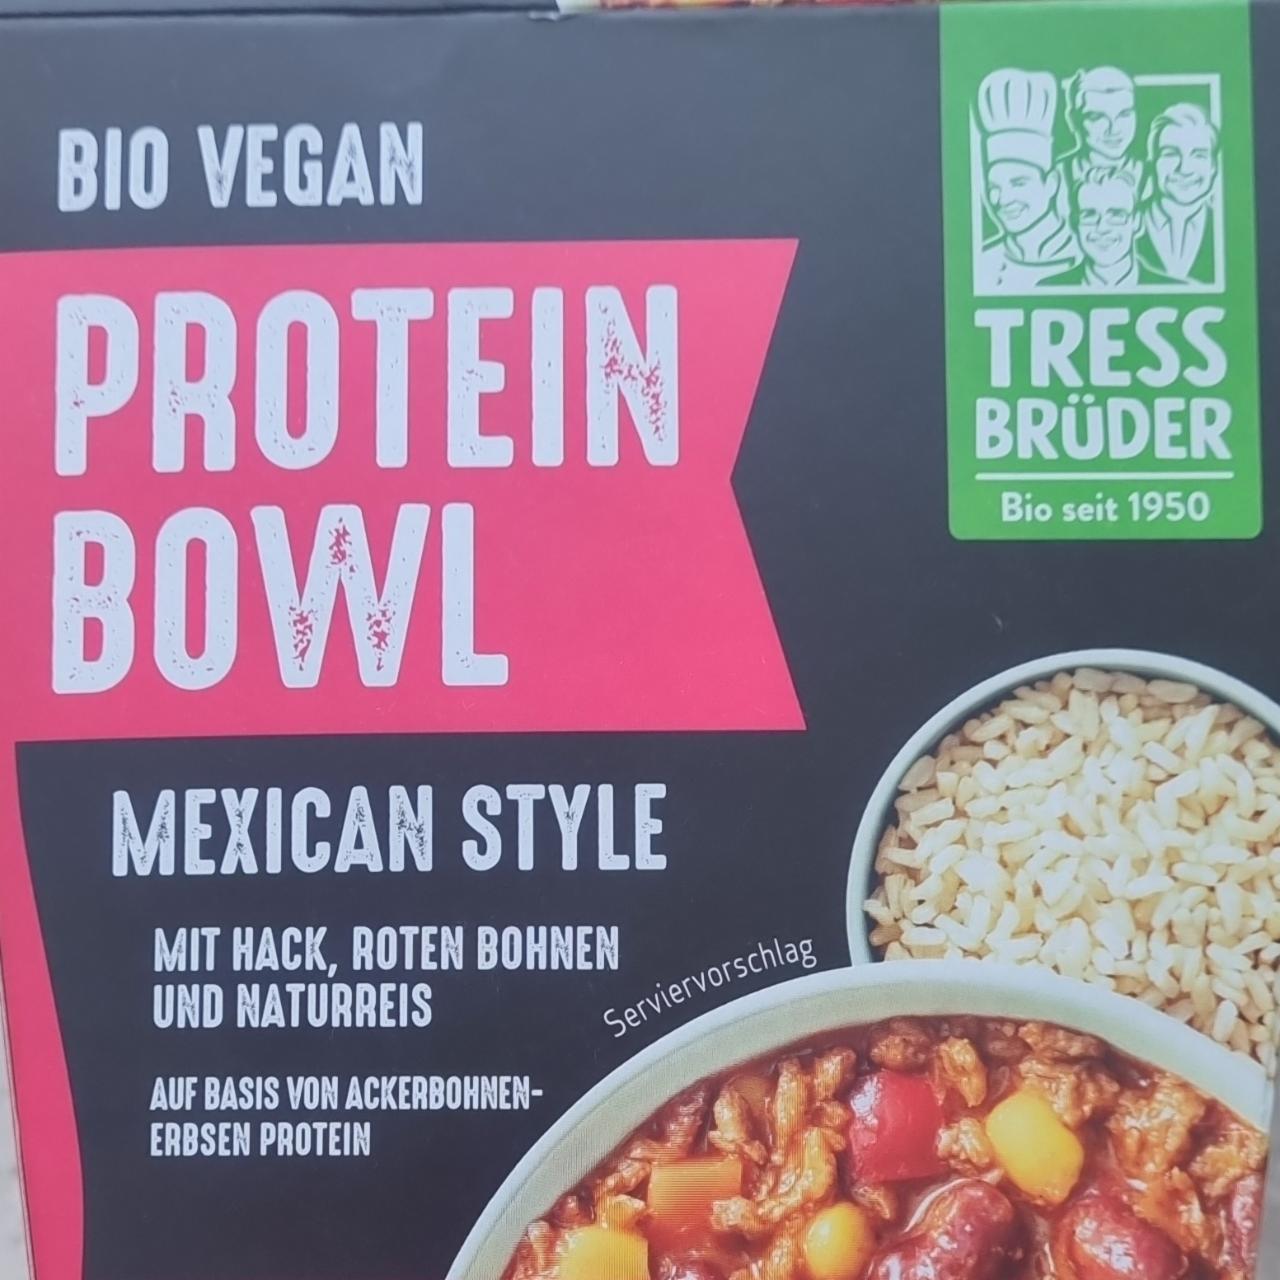 Fotografie - Protein Bowl Mexican Style Tress Brüder